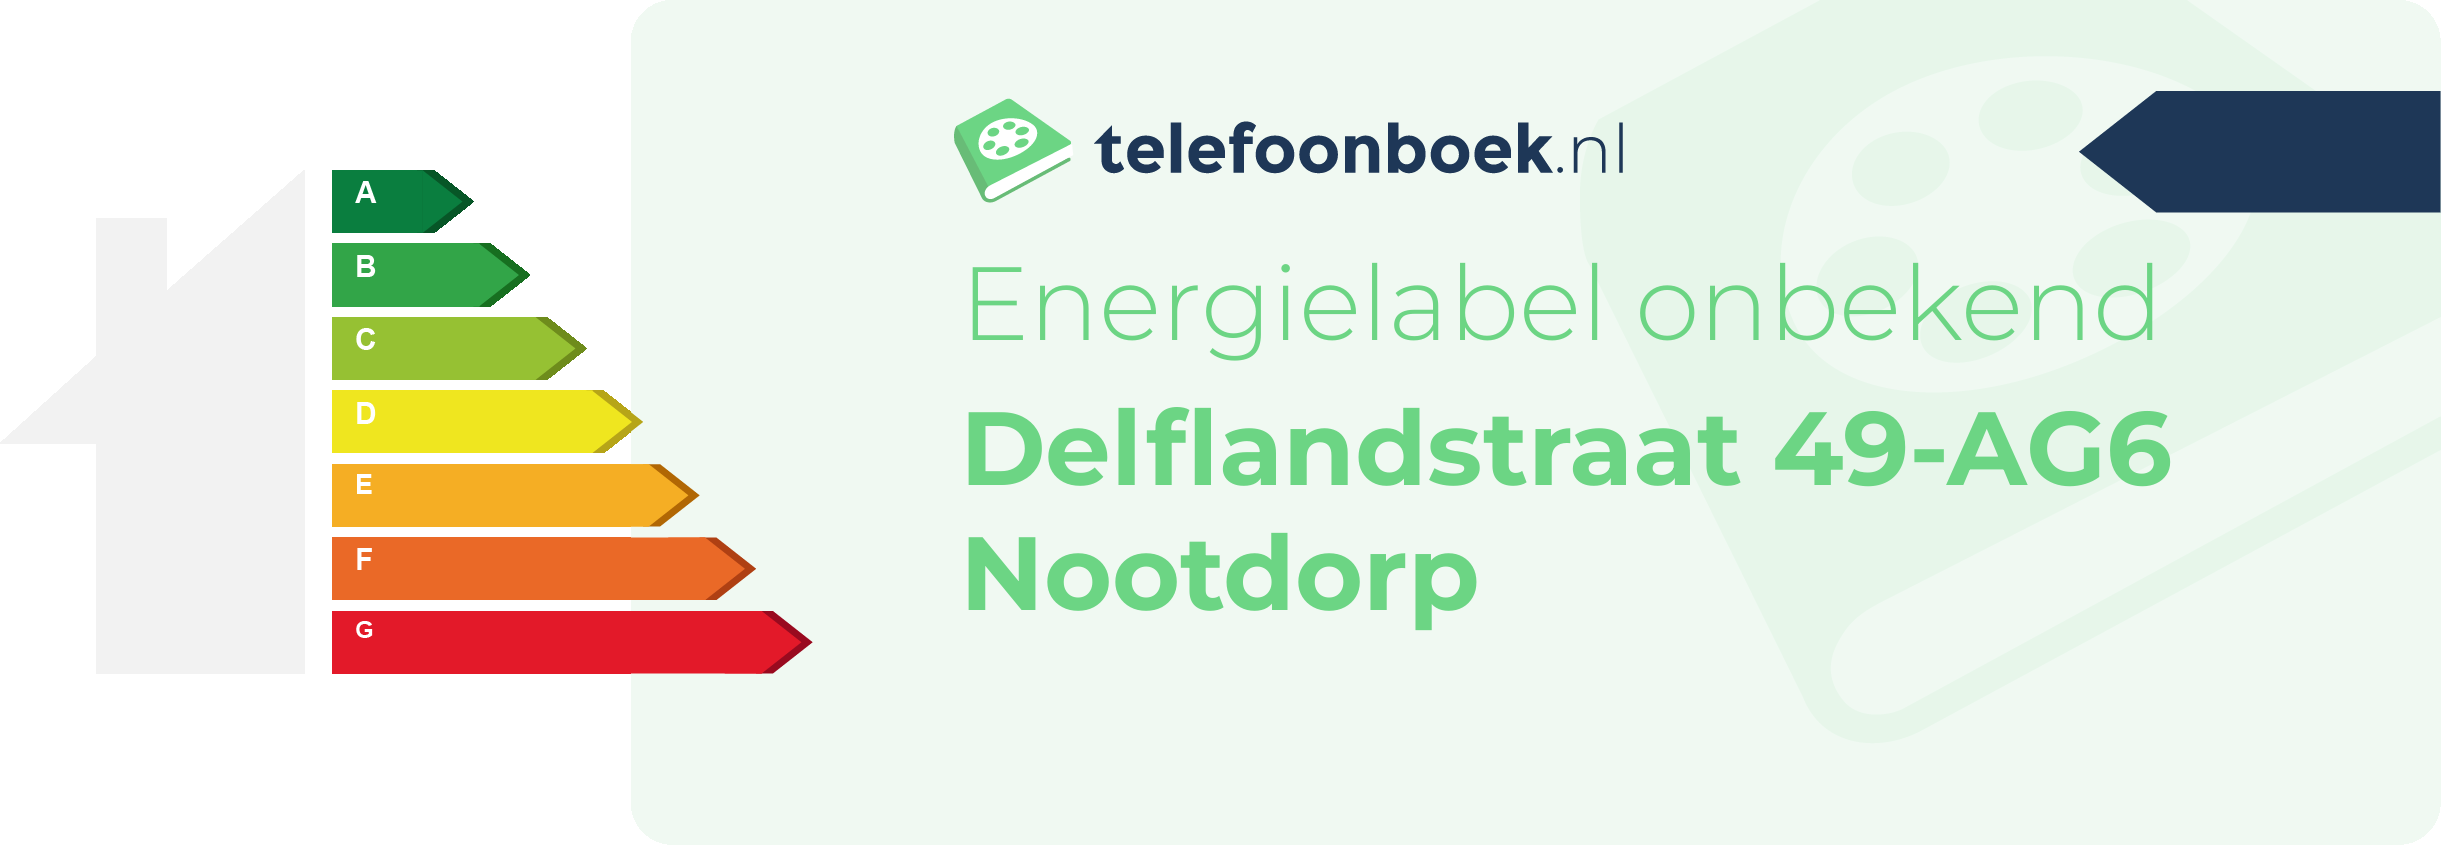 Energielabel Delflandstraat 49-AG6 Nootdorp